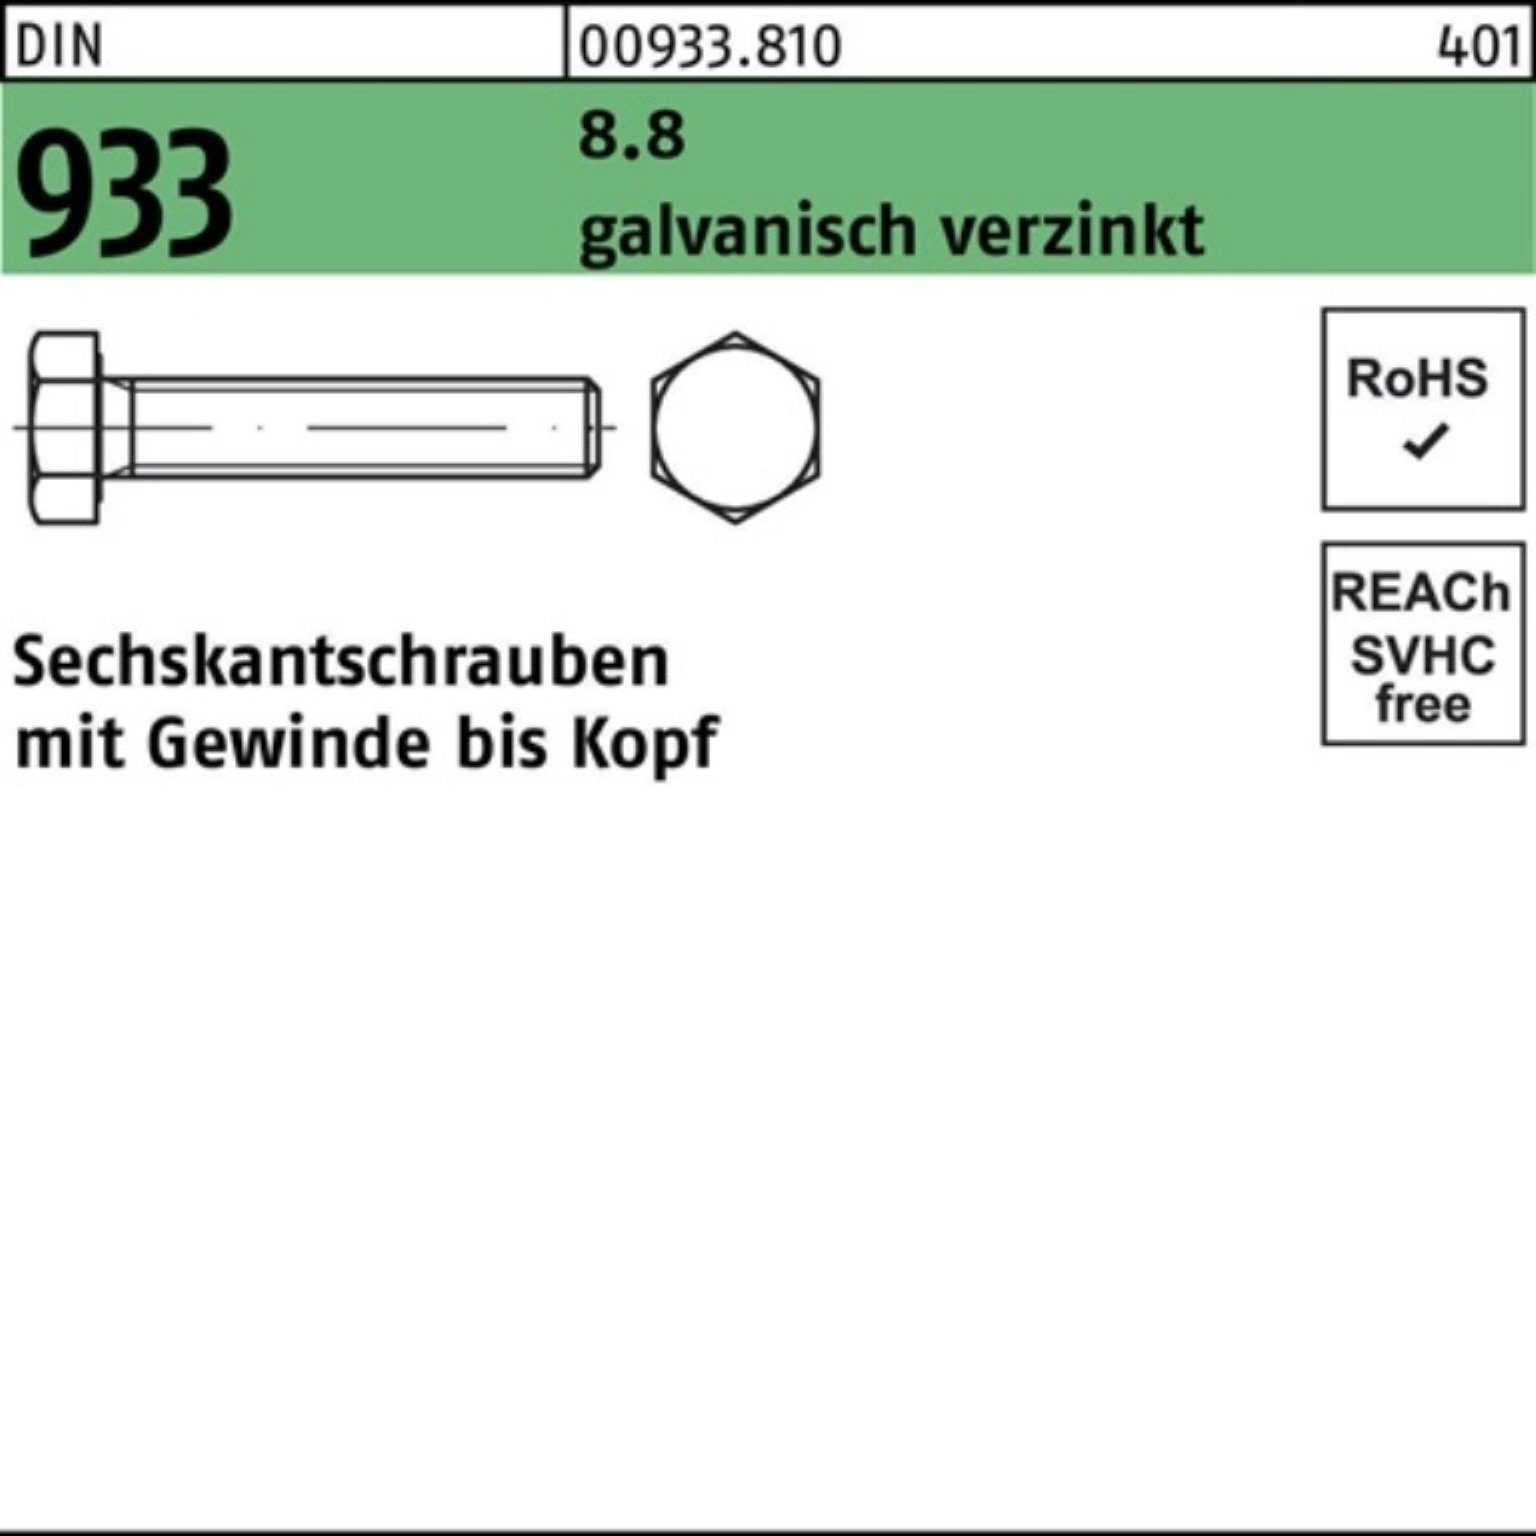 Reyher Sechskantschraube Stü DIN Pack VG Sechskantschraube 280 M30x 8.8 galv.verz. 100er 1 933